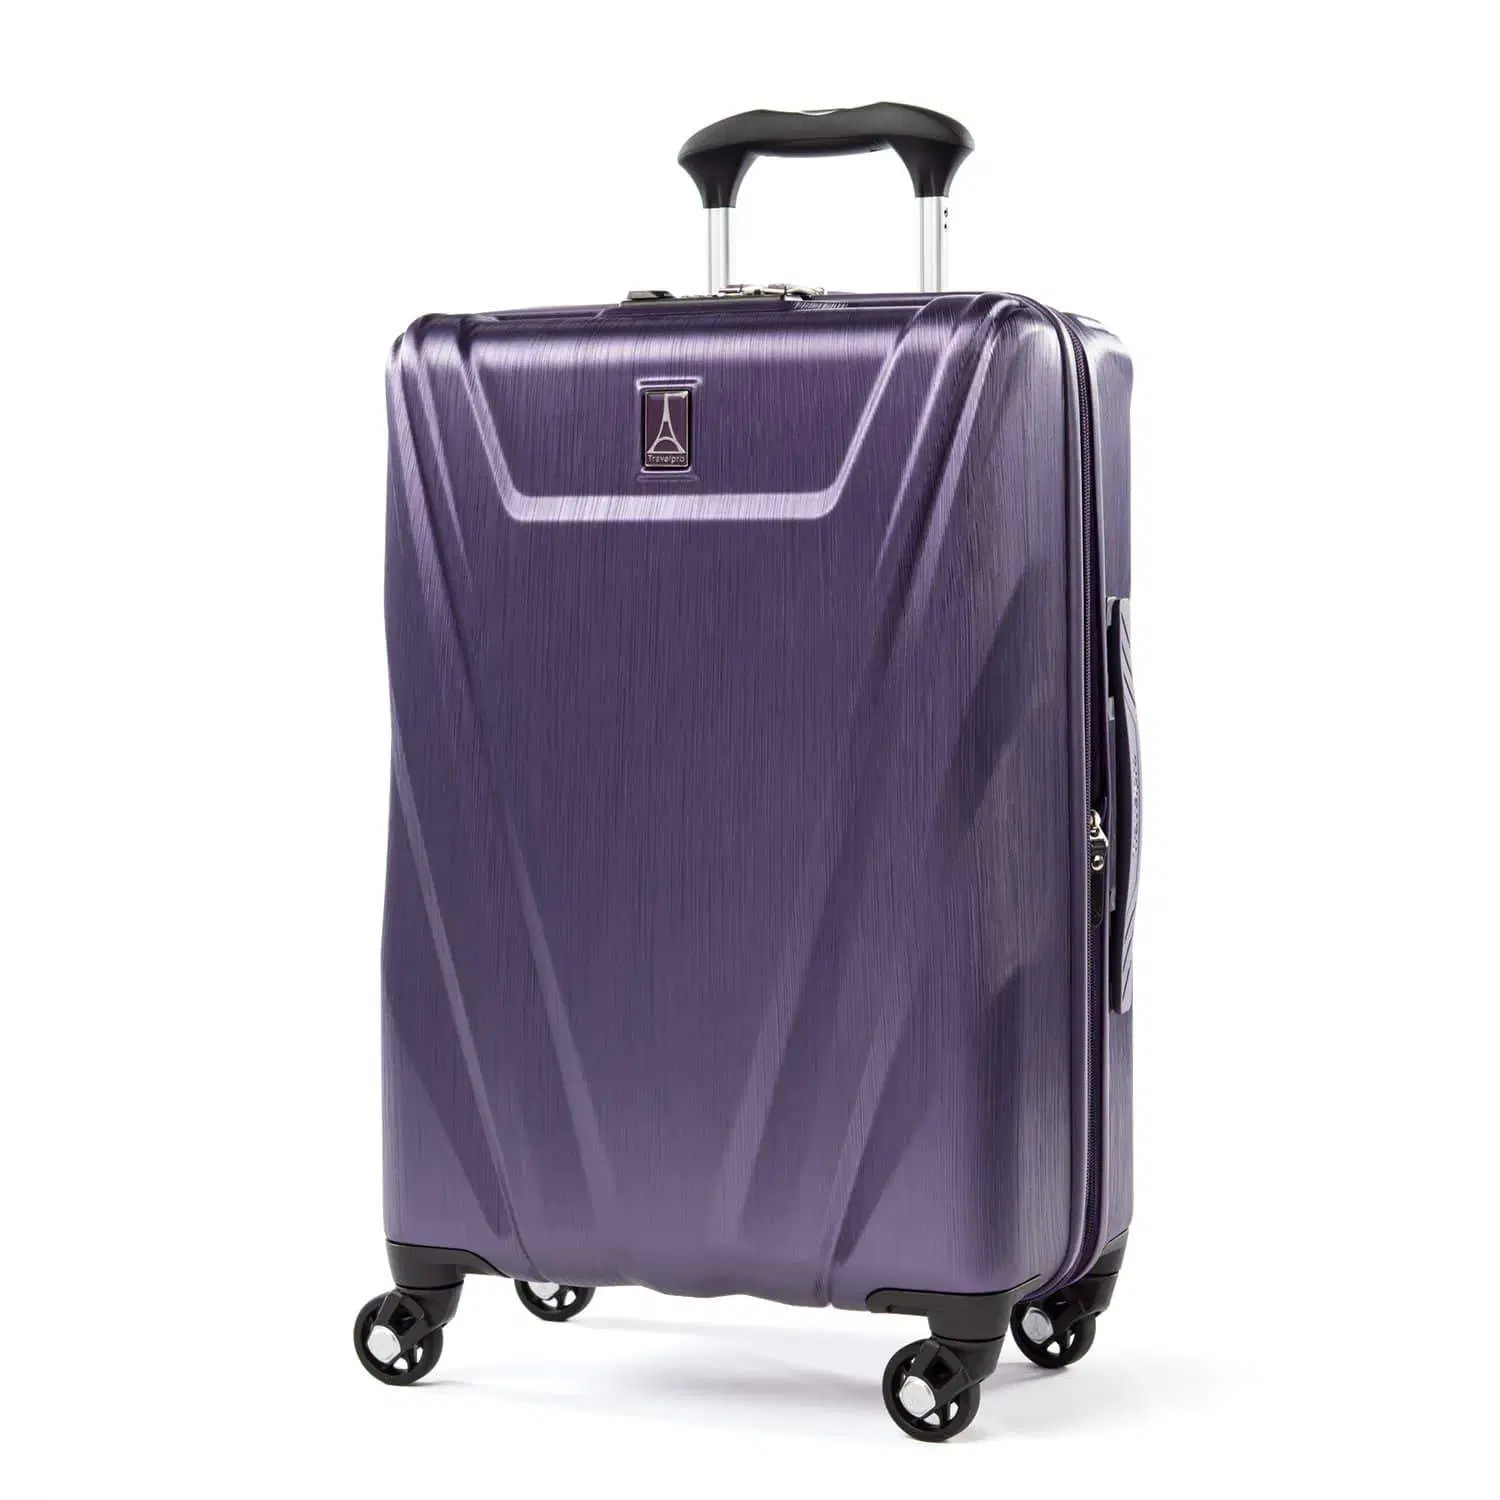 Travelpro Maxlite 5 Softside Expandable Spinner Wheel Luggage, Black, 2-Piece Set (21/29)